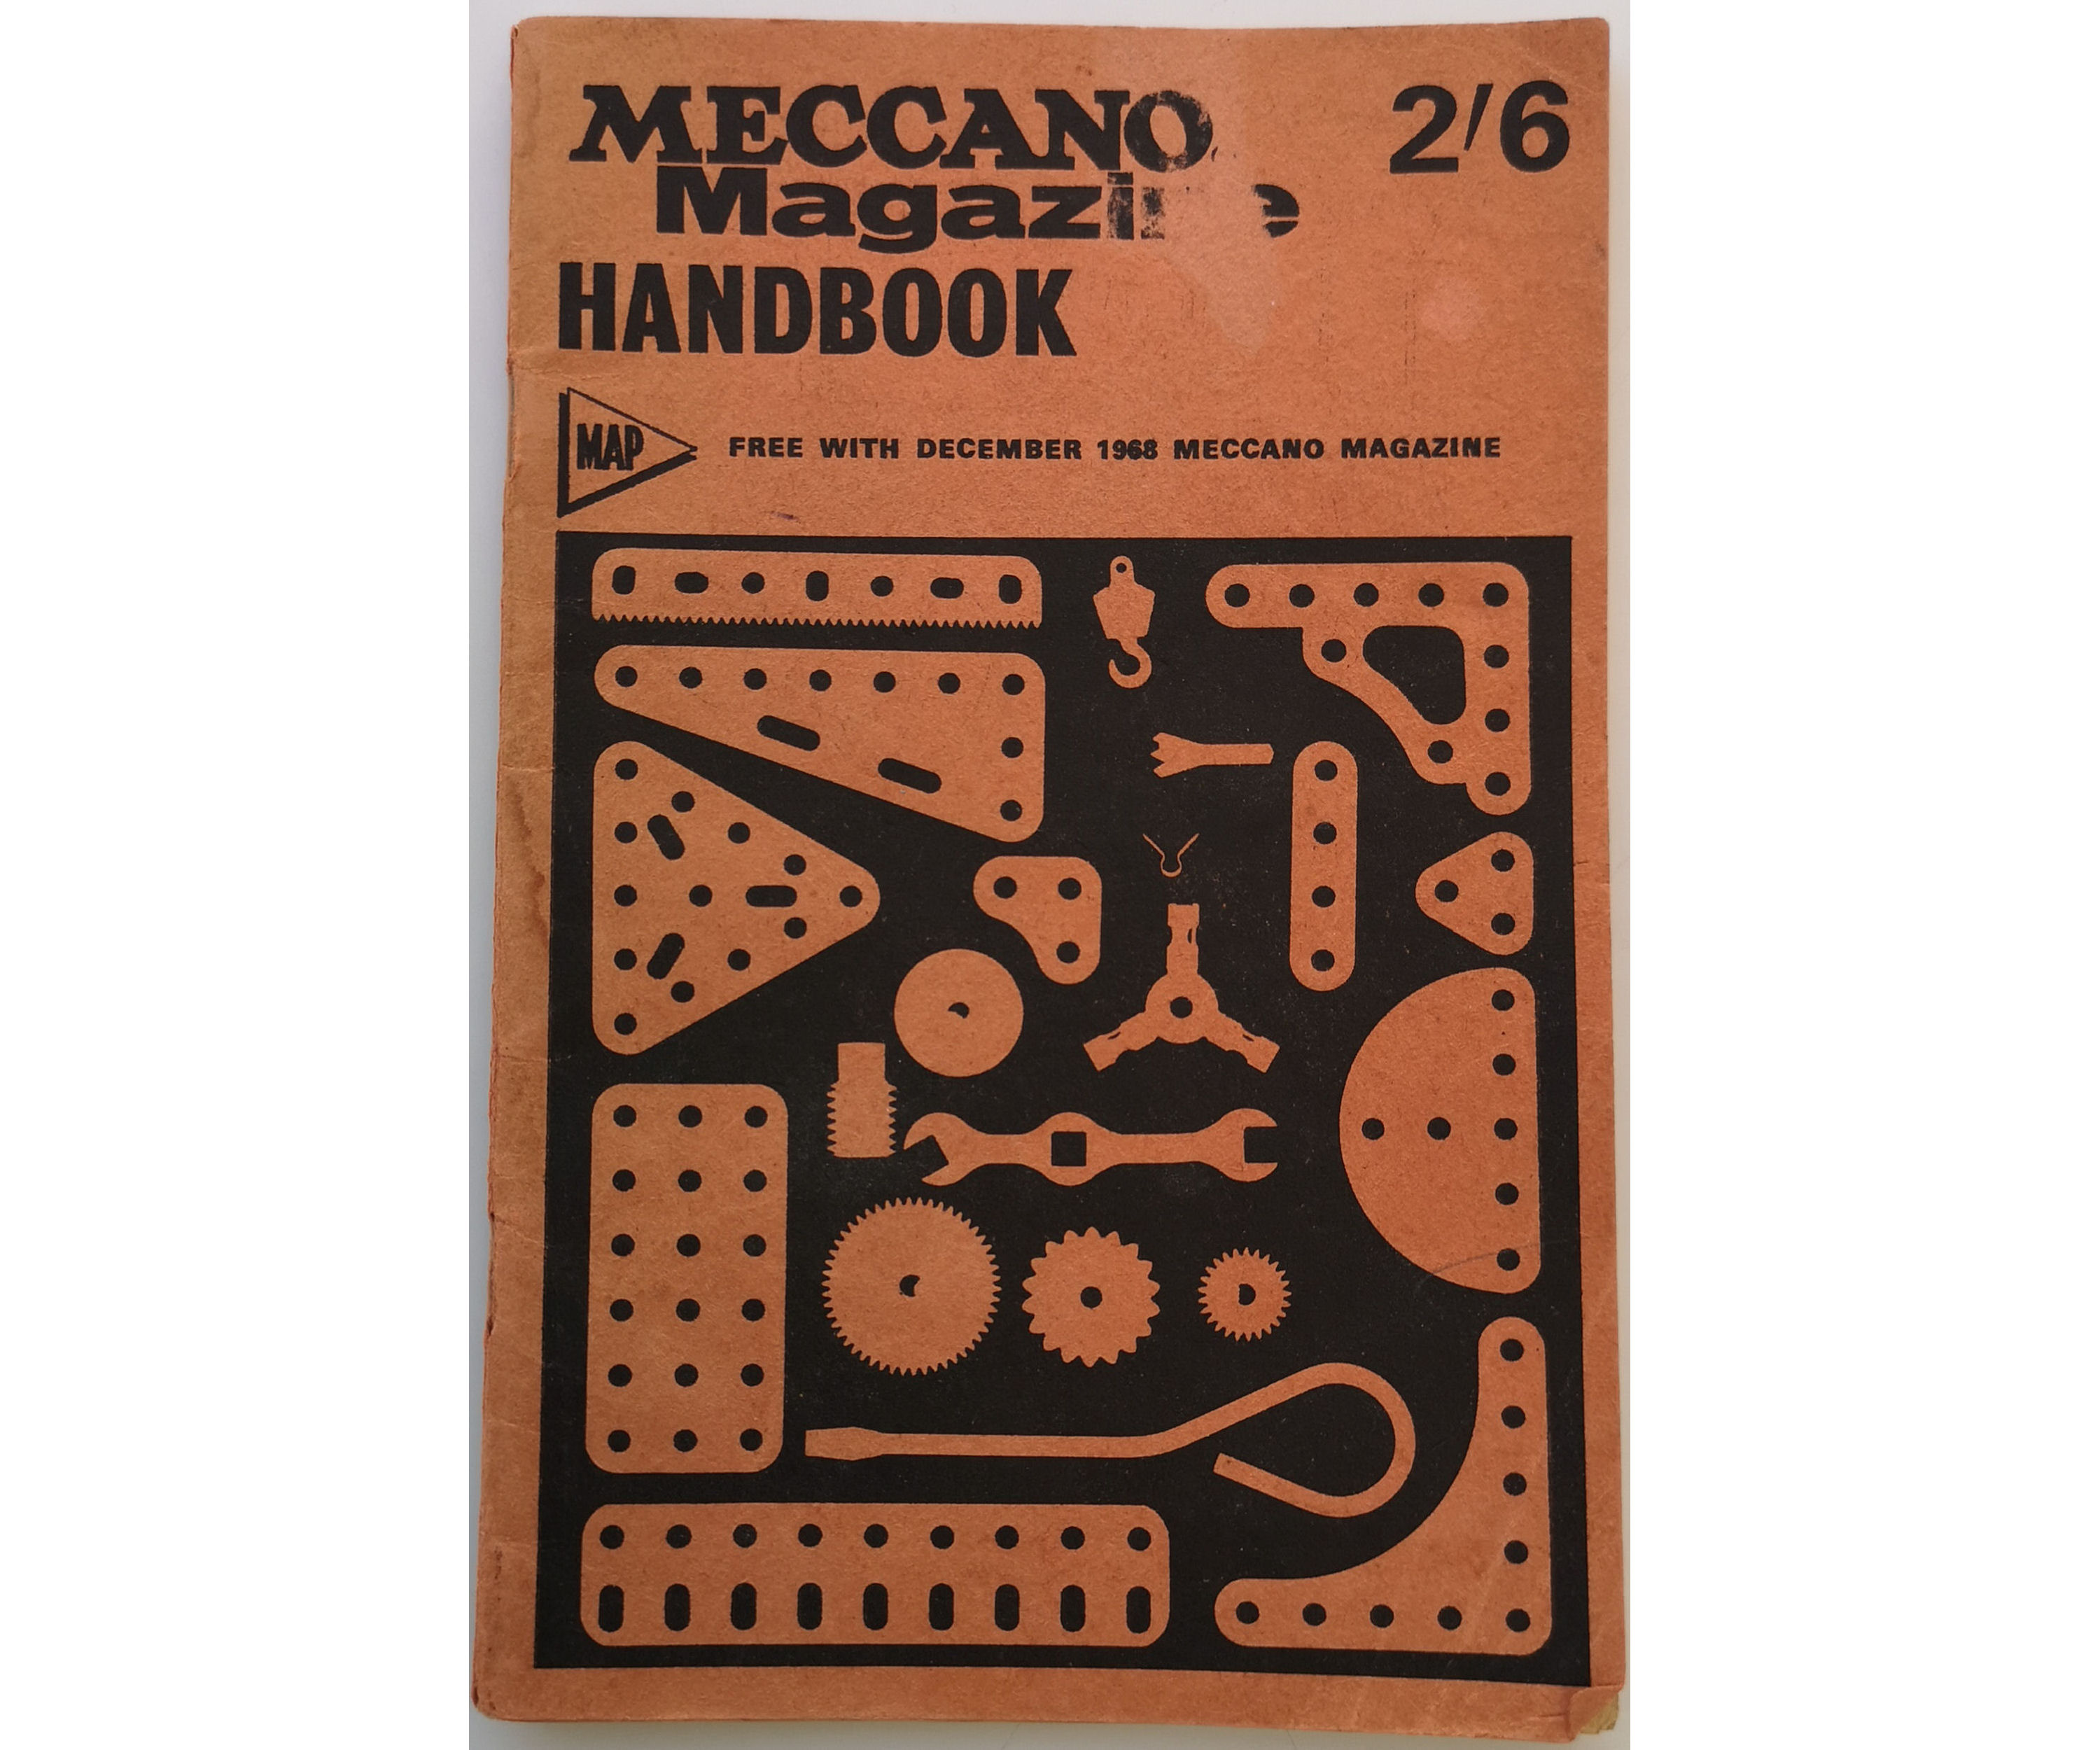 LOT 0188 - MECCANO MAGAZINE HANDBOOK